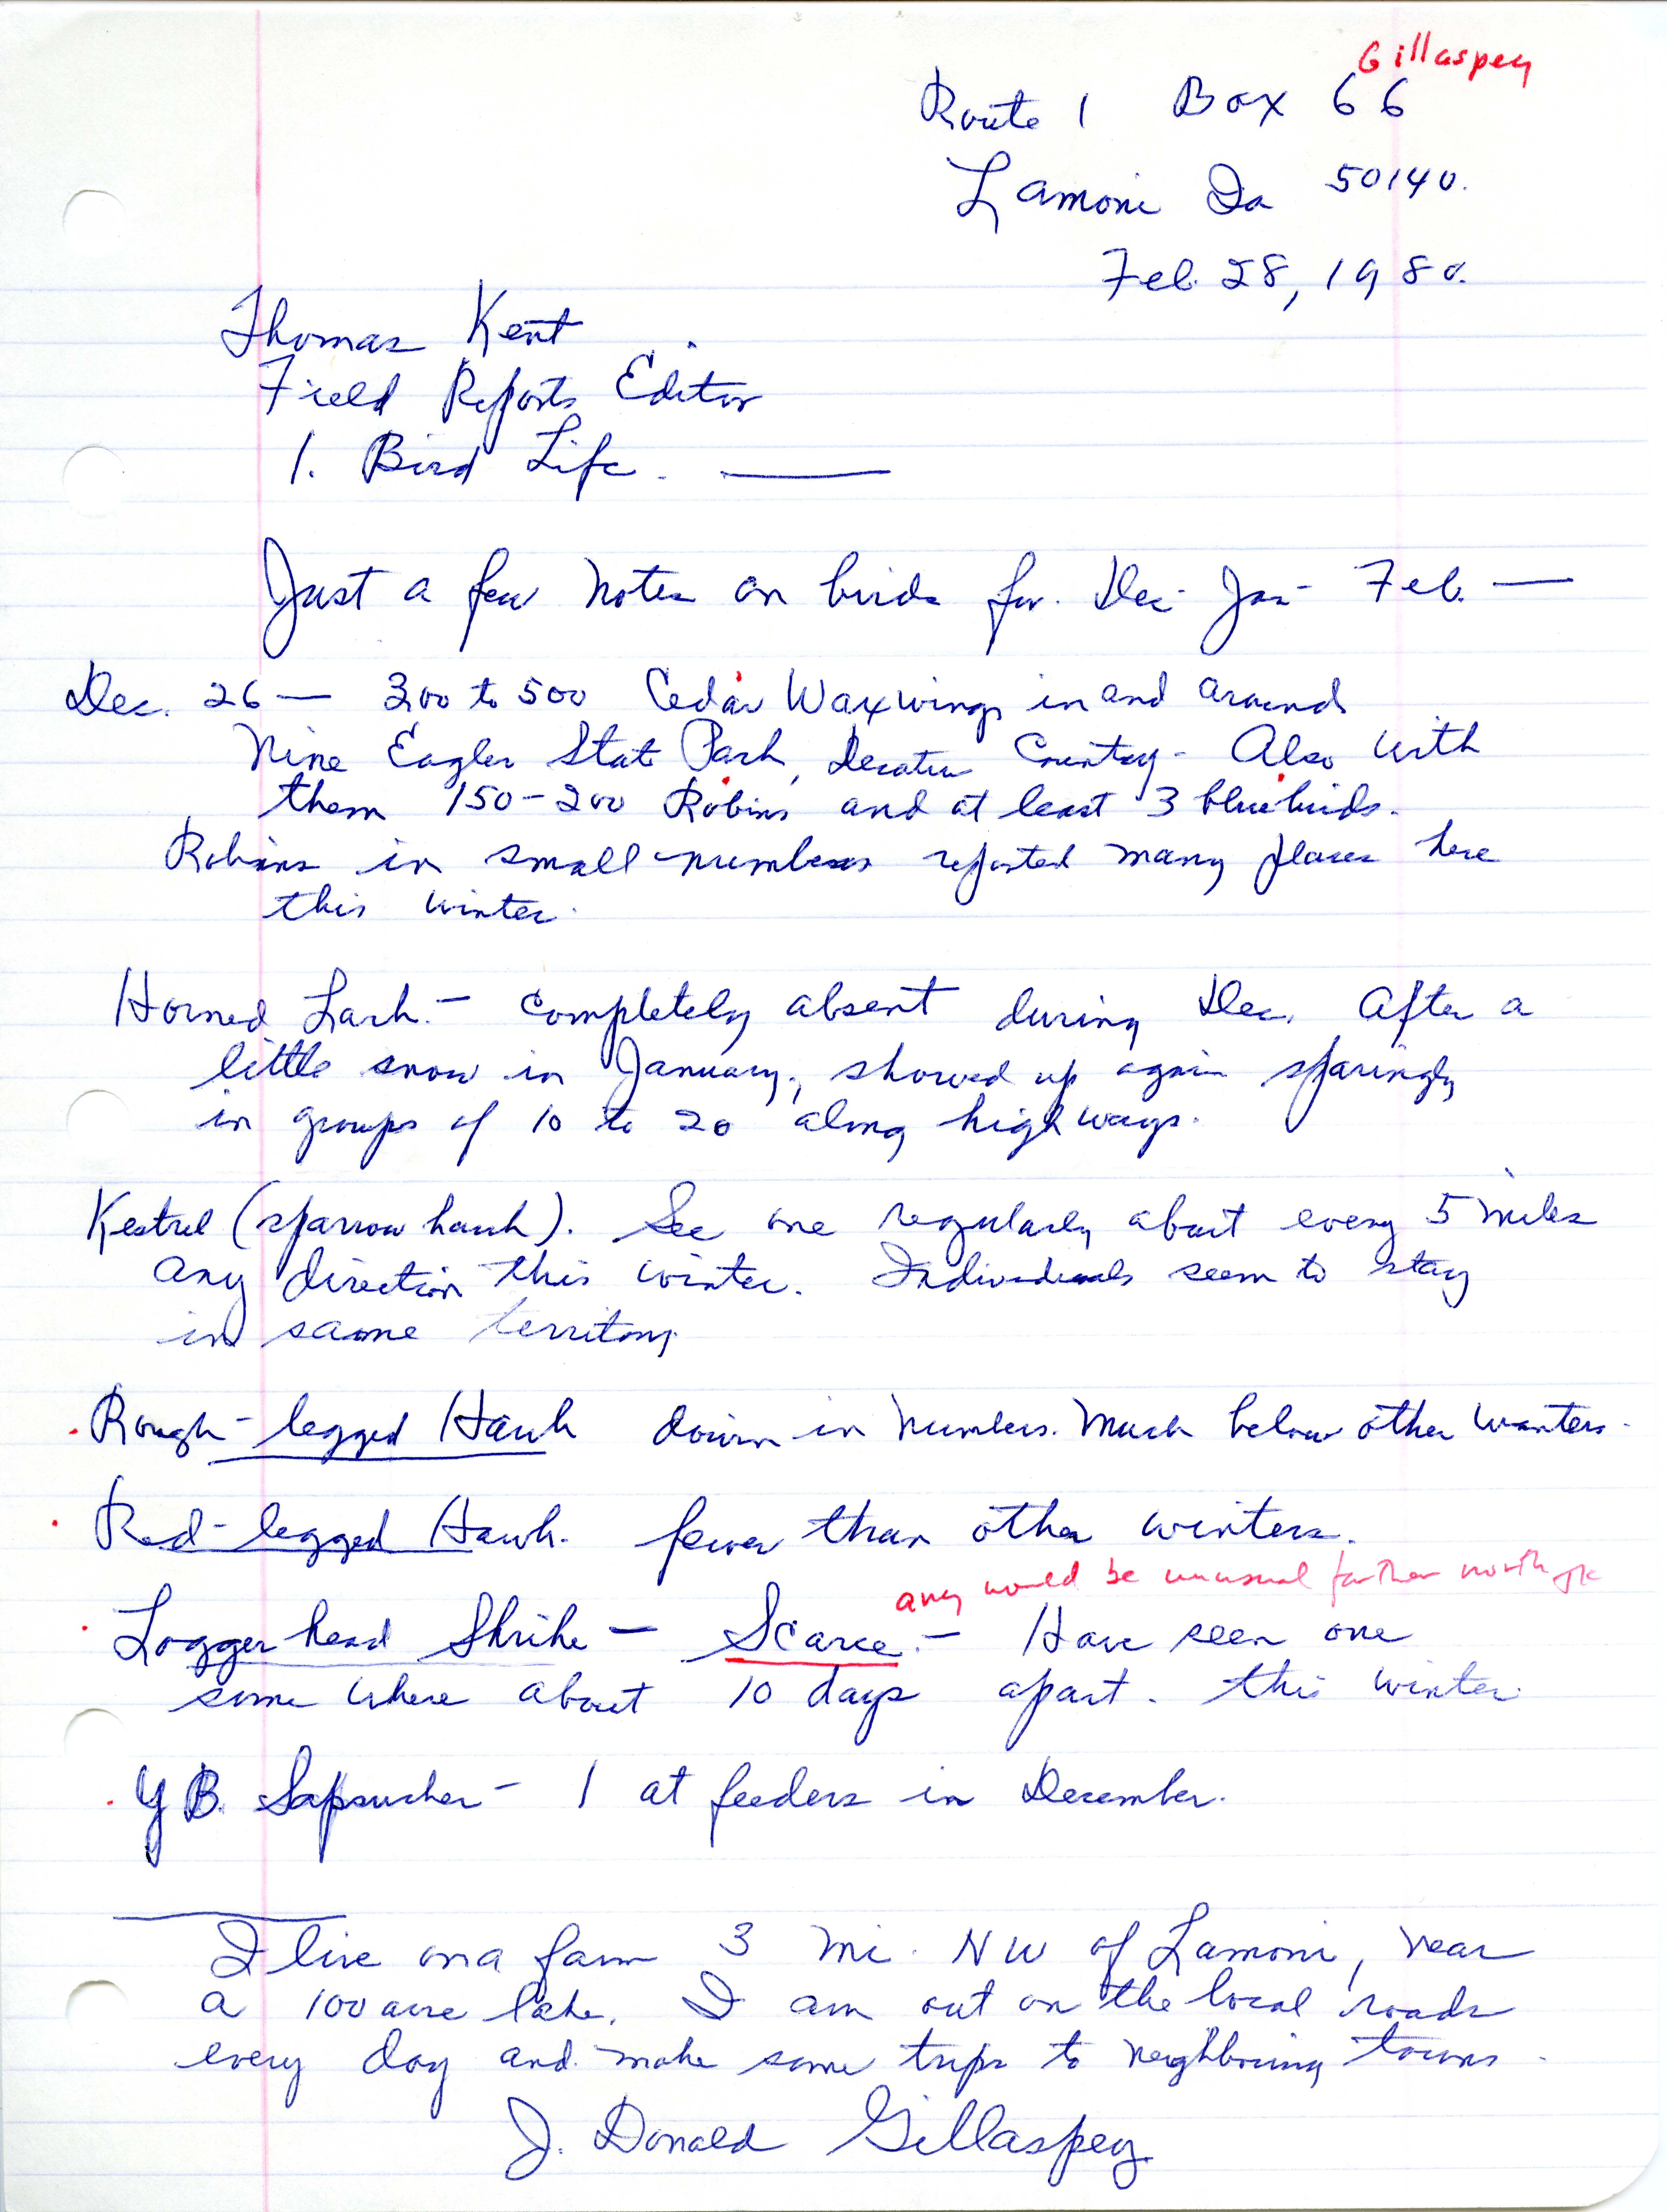 J. Donald Gillaspey letter to Thomas H. Kent regarding bird sightings, February 28, 1980